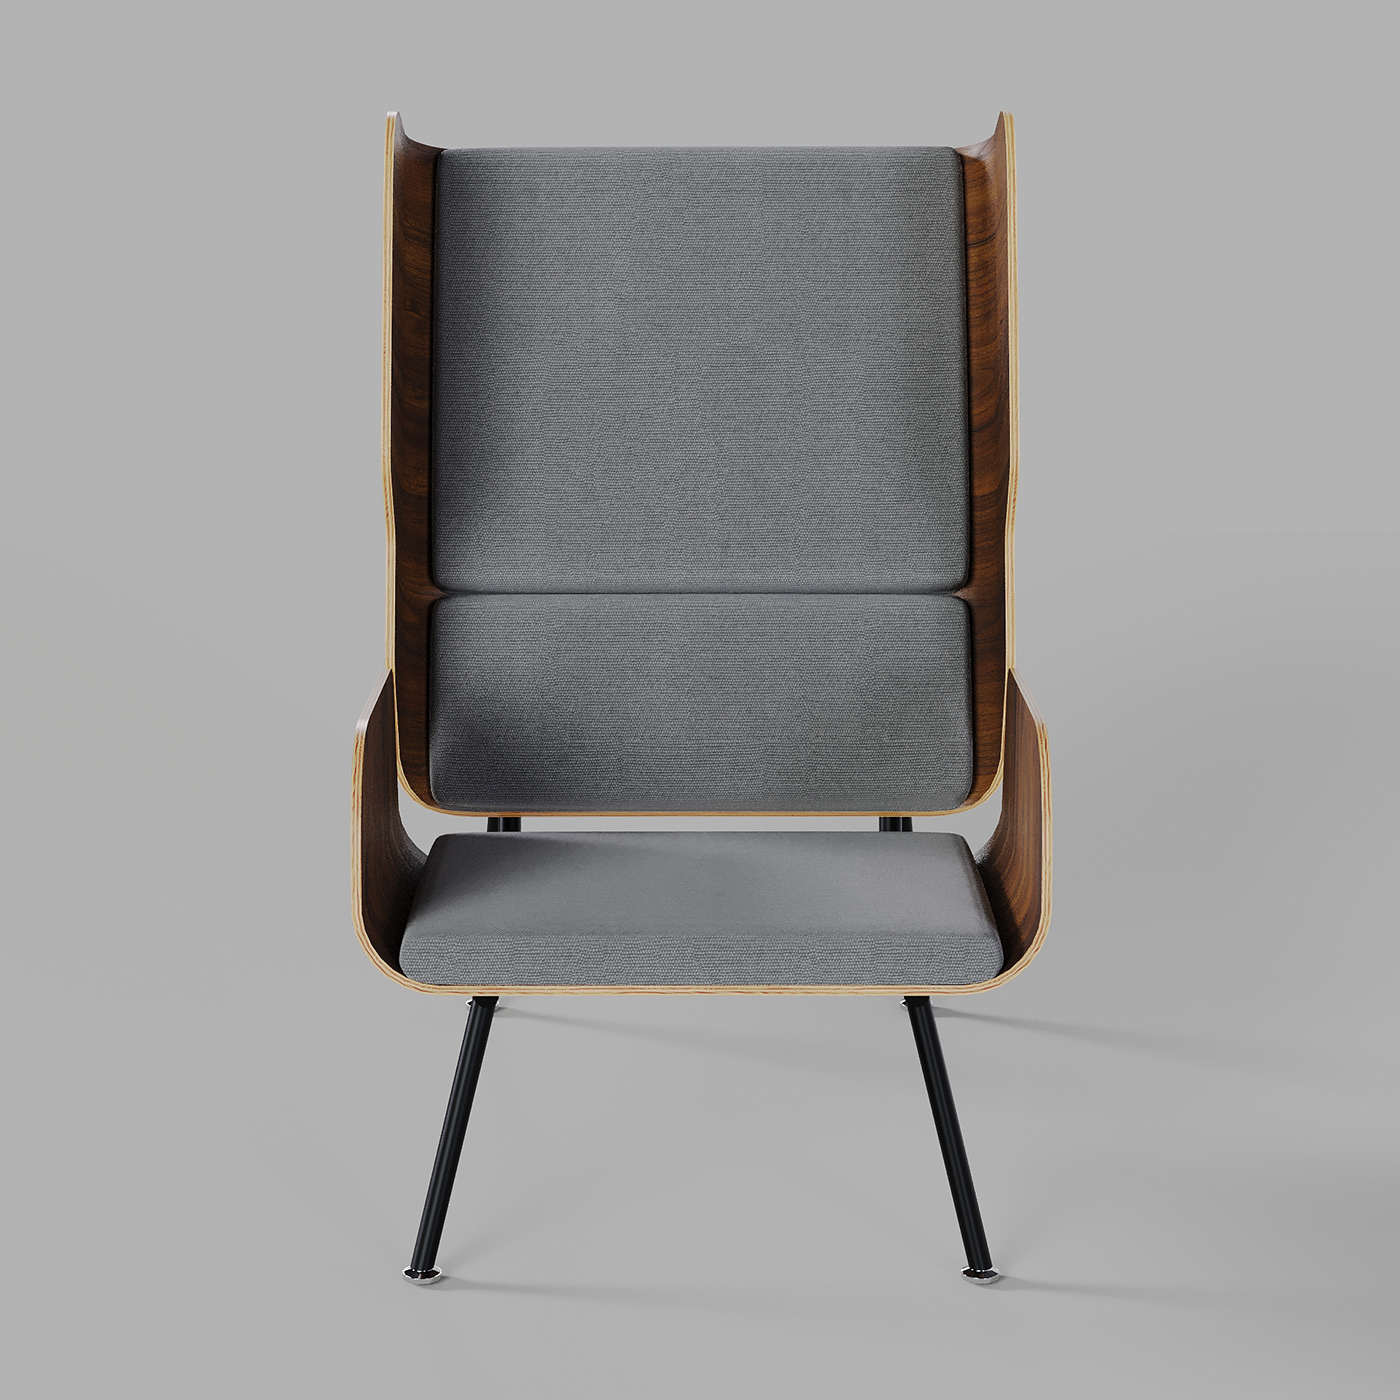 architecture 3dmodel Render visualization chair 3dsmax corona gus GusModern elkchair